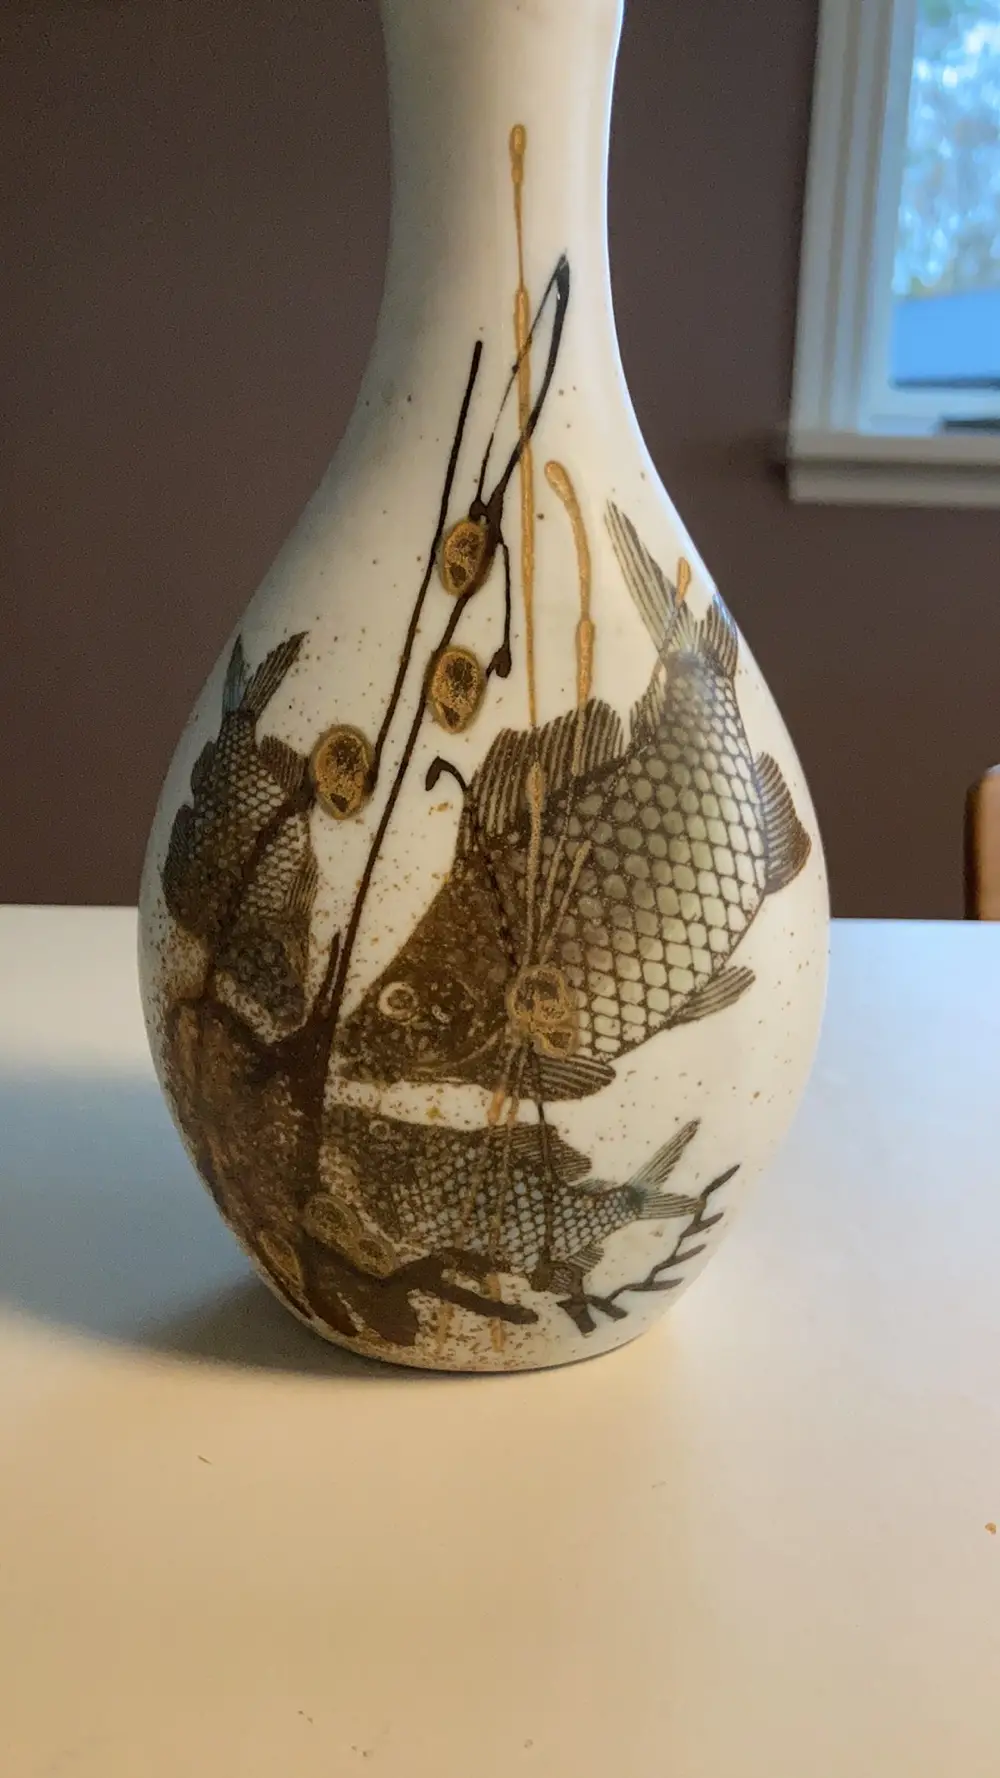 royal copenhagen Vase